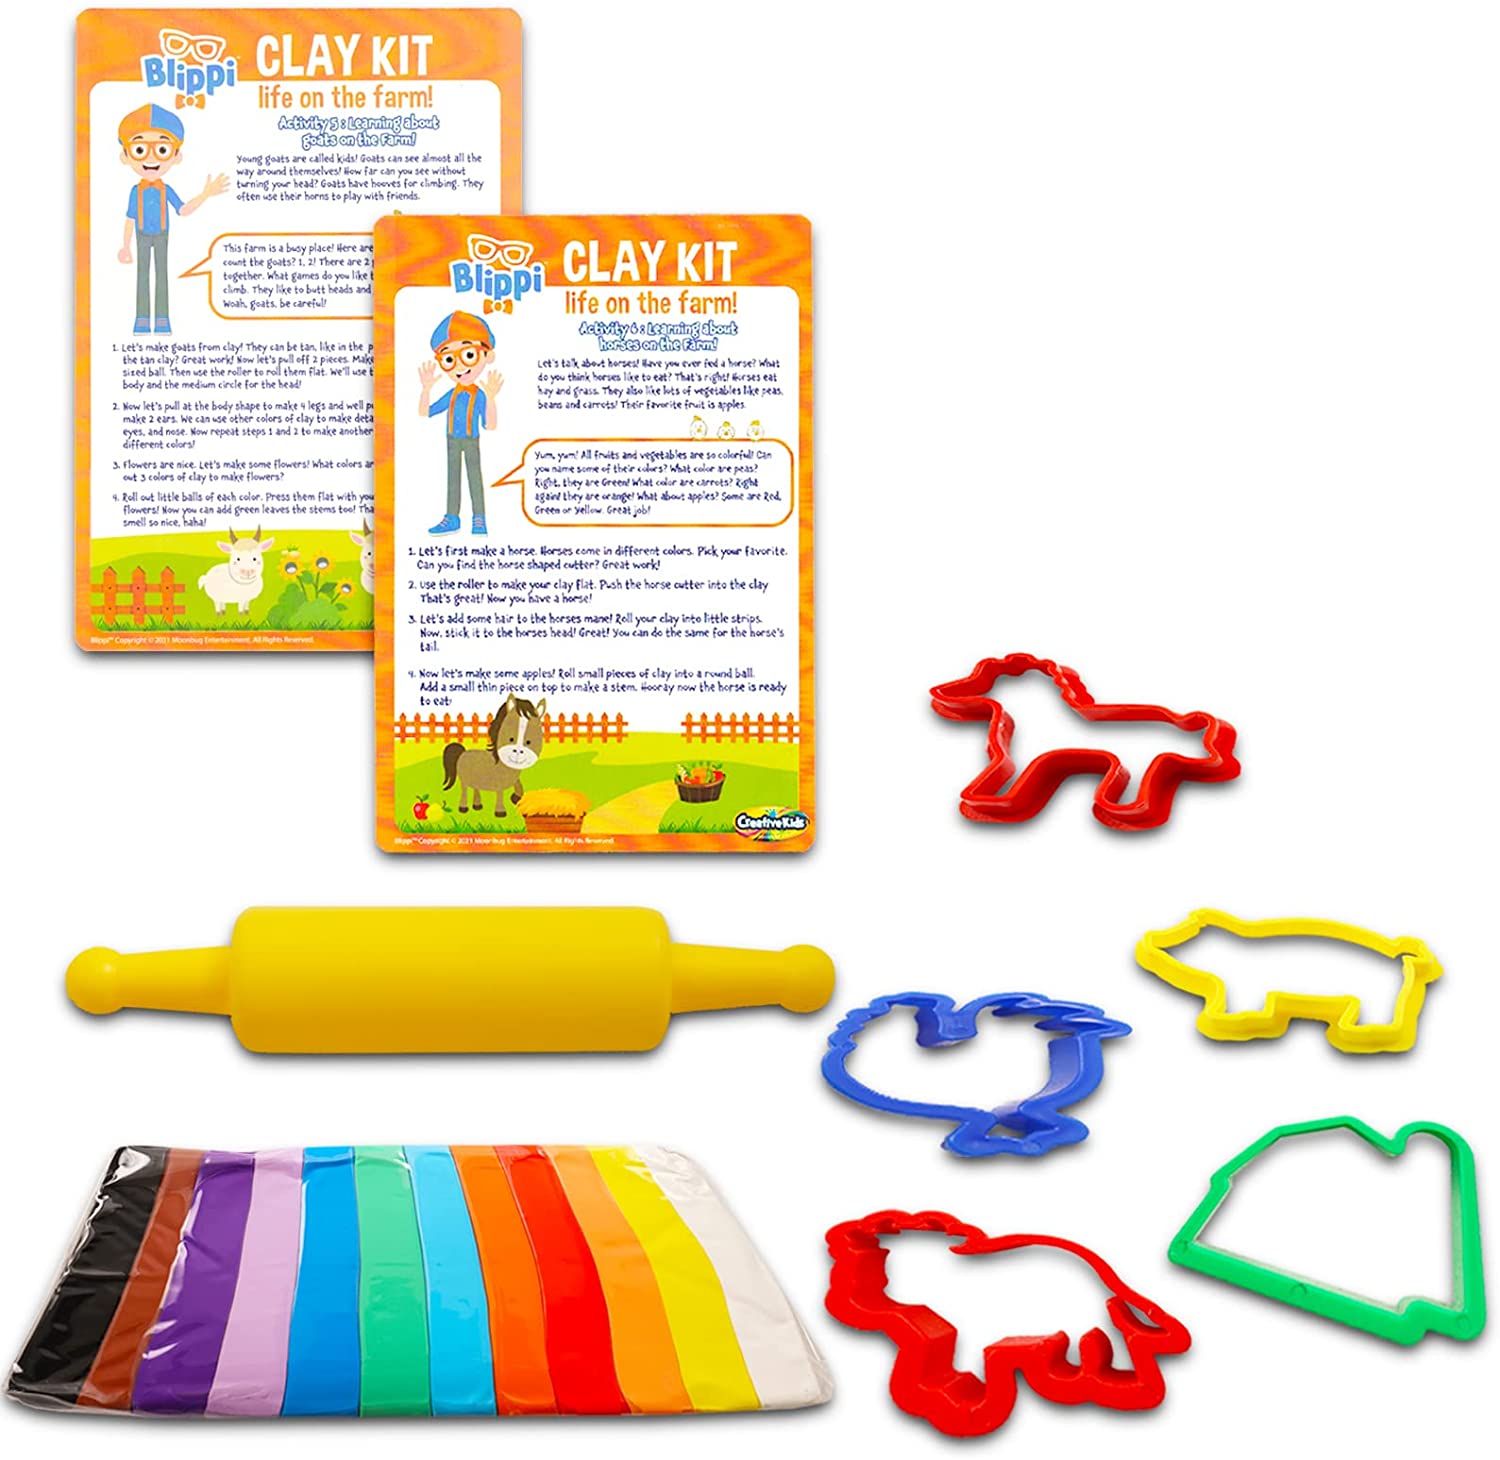 Scrapbooking Wonder Kit – Creative Kids Wonderland